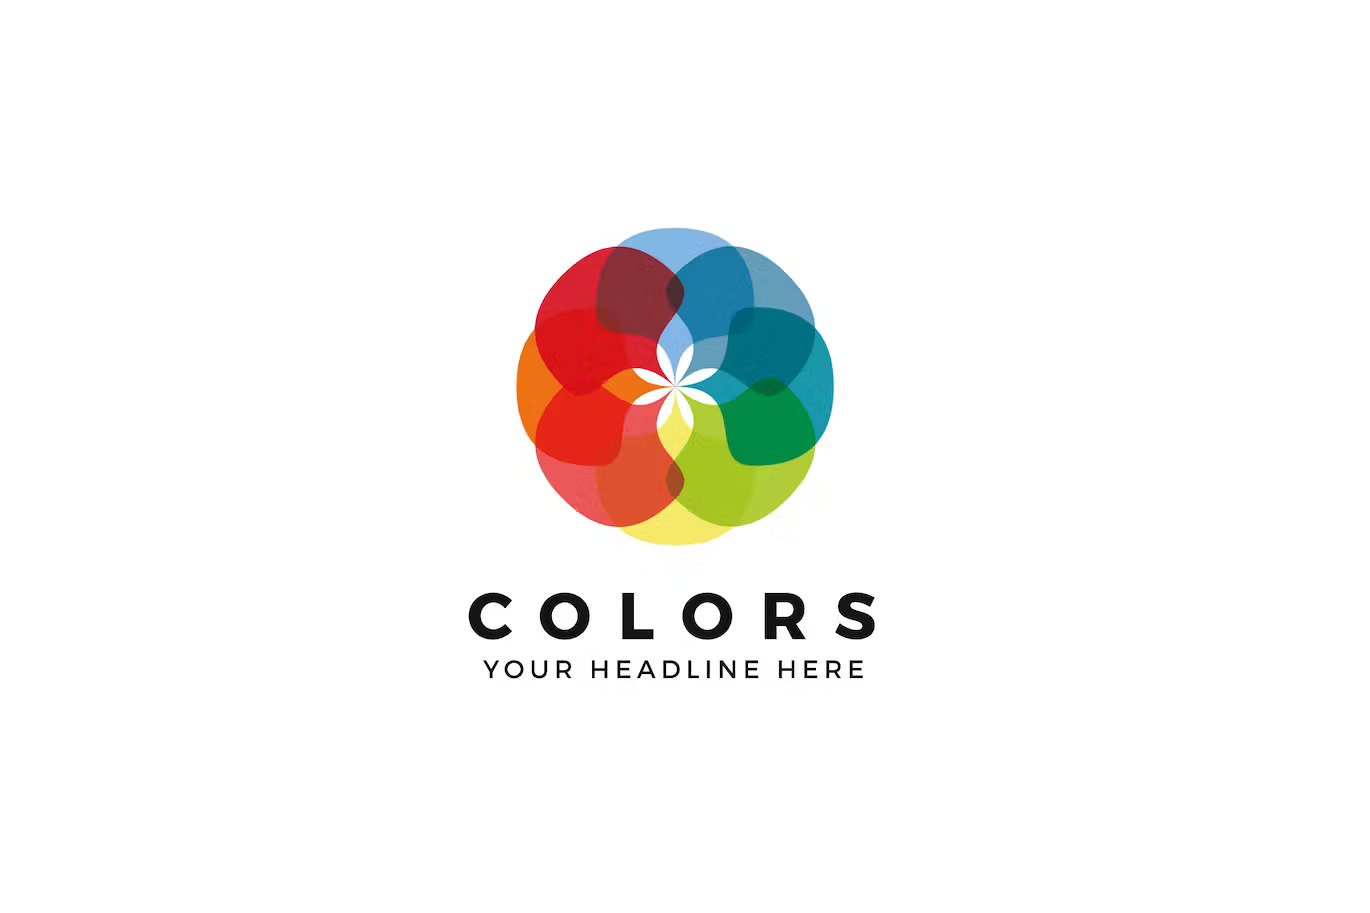 A colors logo template